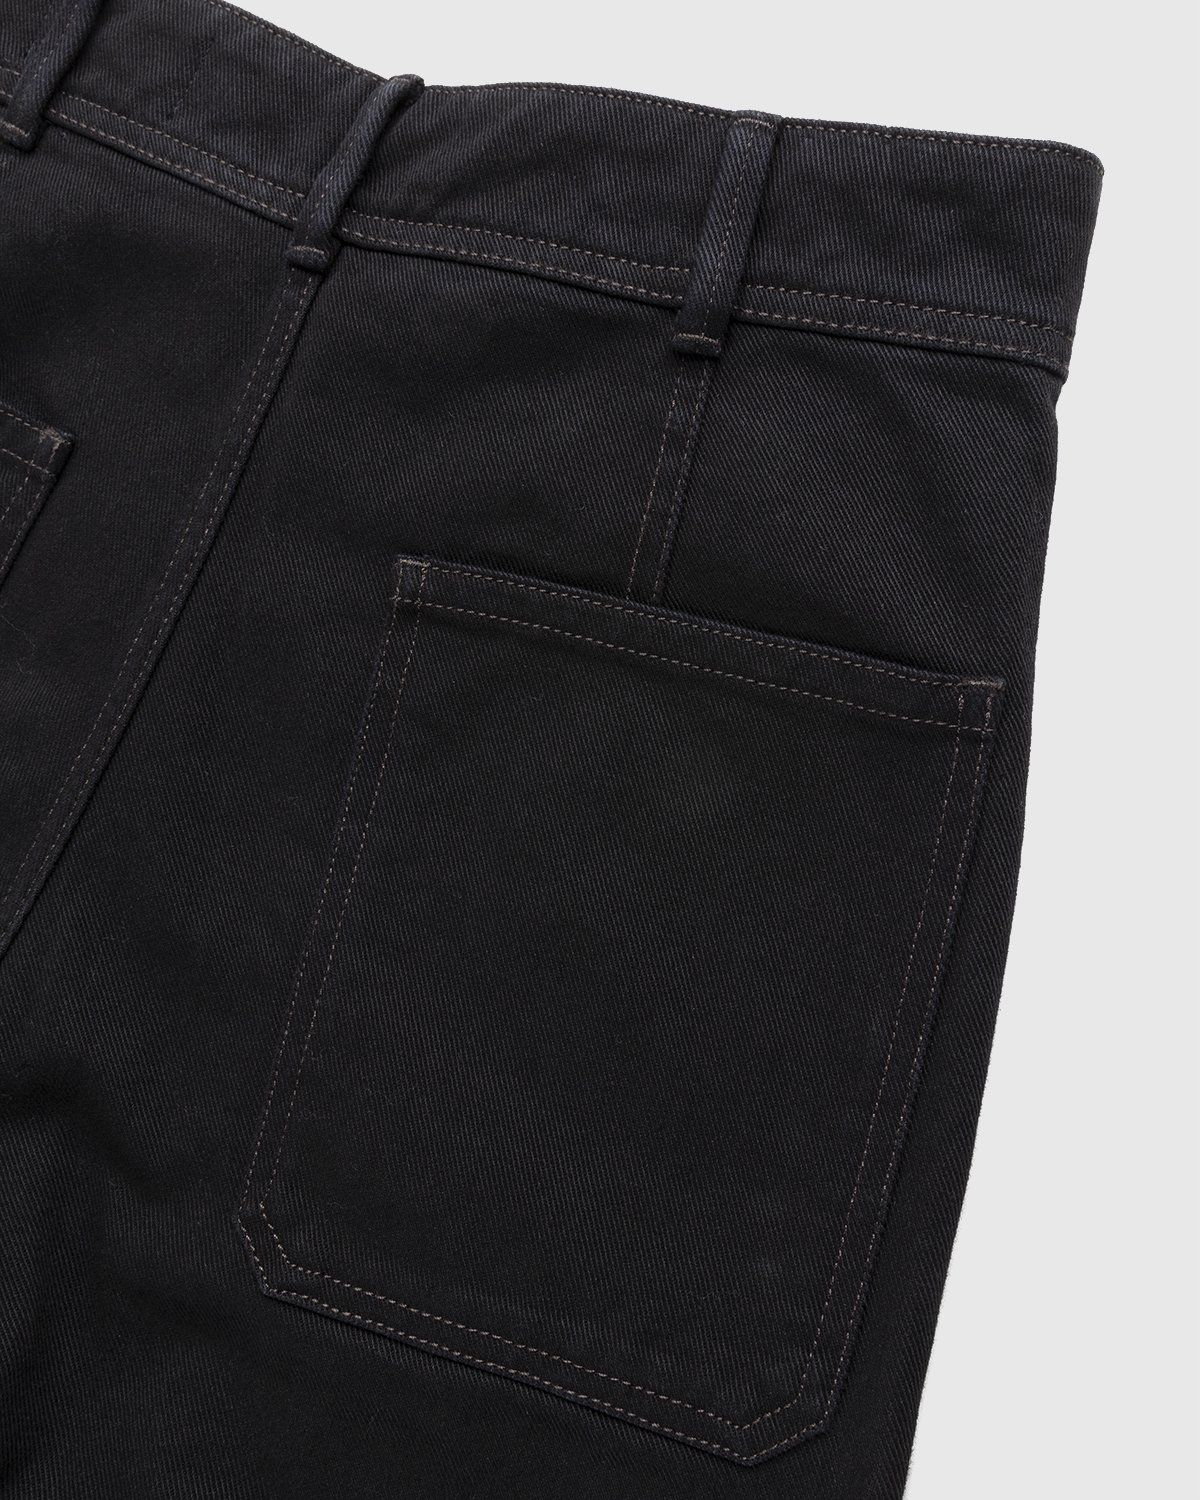 Lemaire – Rinsed Denim Sailor Pants Black - Pants - Black - Image 4